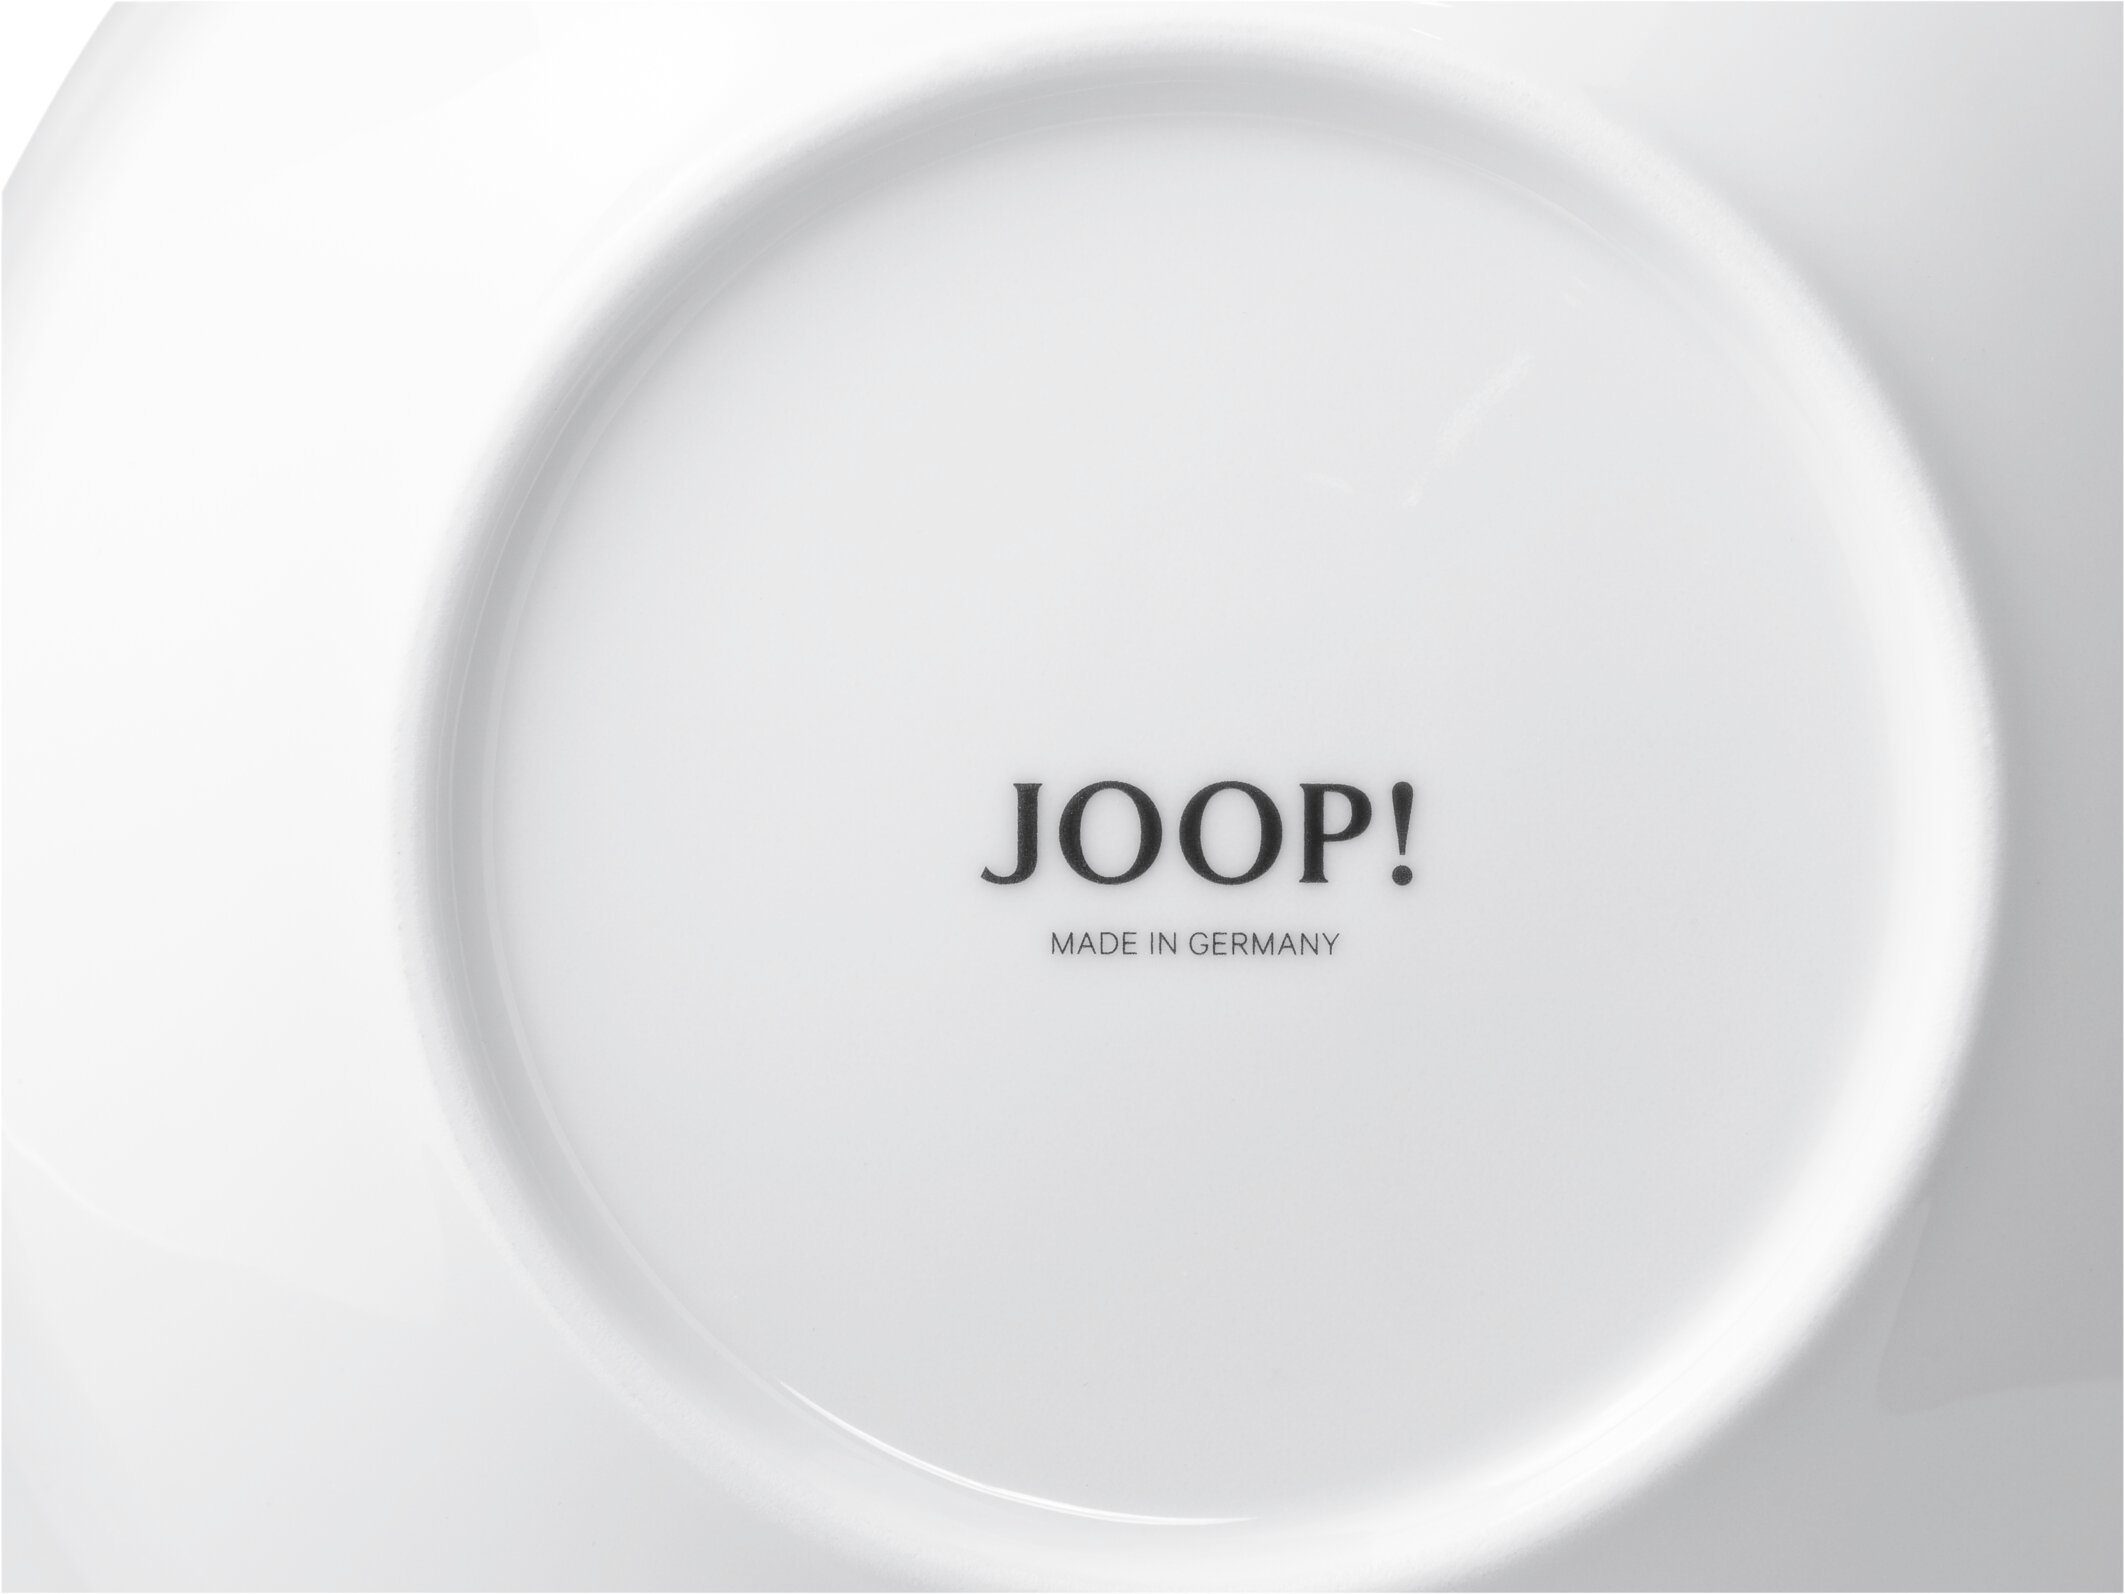 Joop! Espressotasse LIVING 2, JOOP! - Espressotasse Porzellan Set CORNFLOWER FADED